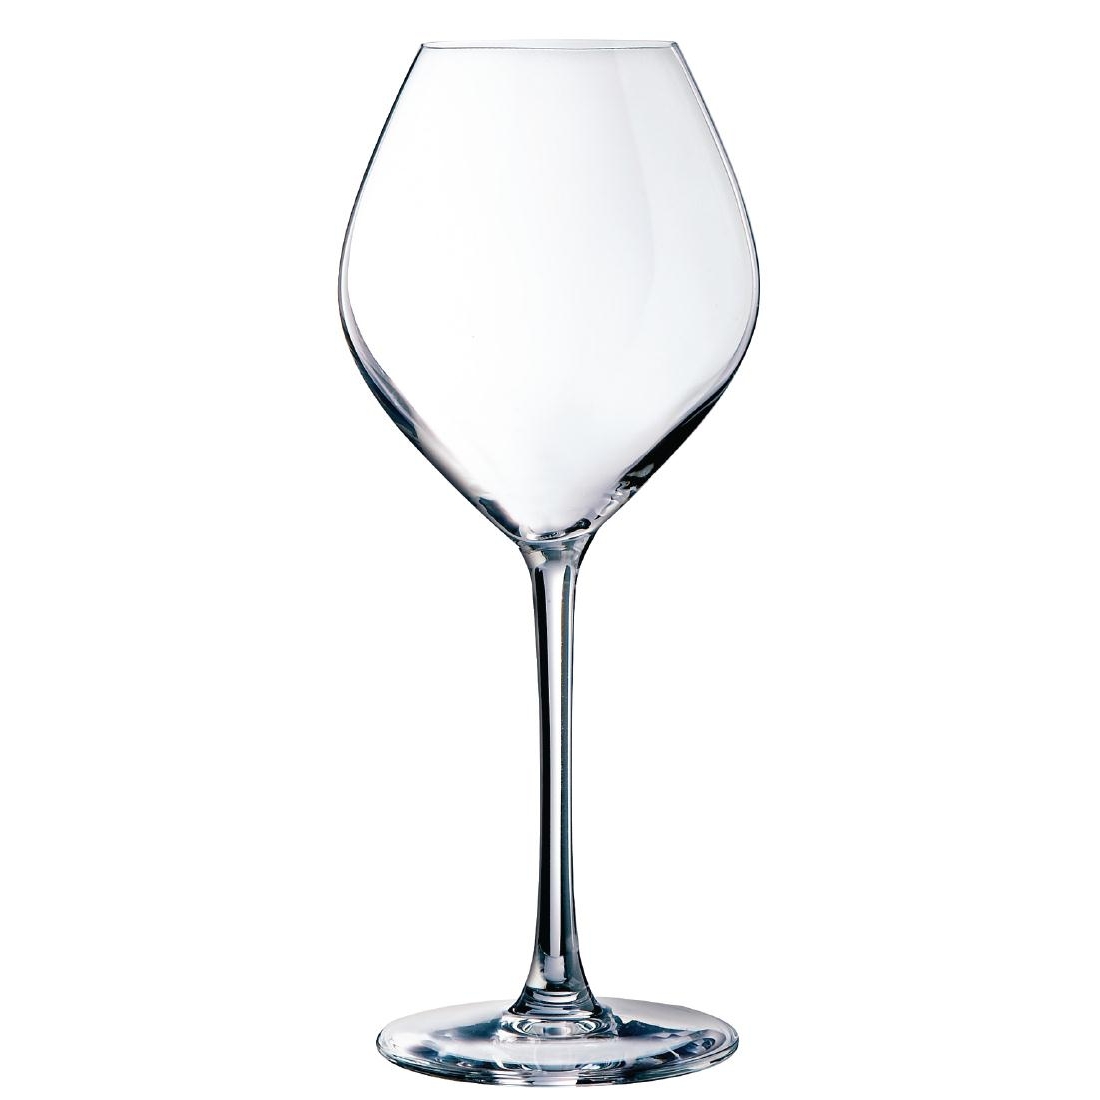 Chef & Sommelier Grand Cepages Magnifique White Wine Glasses 350ml